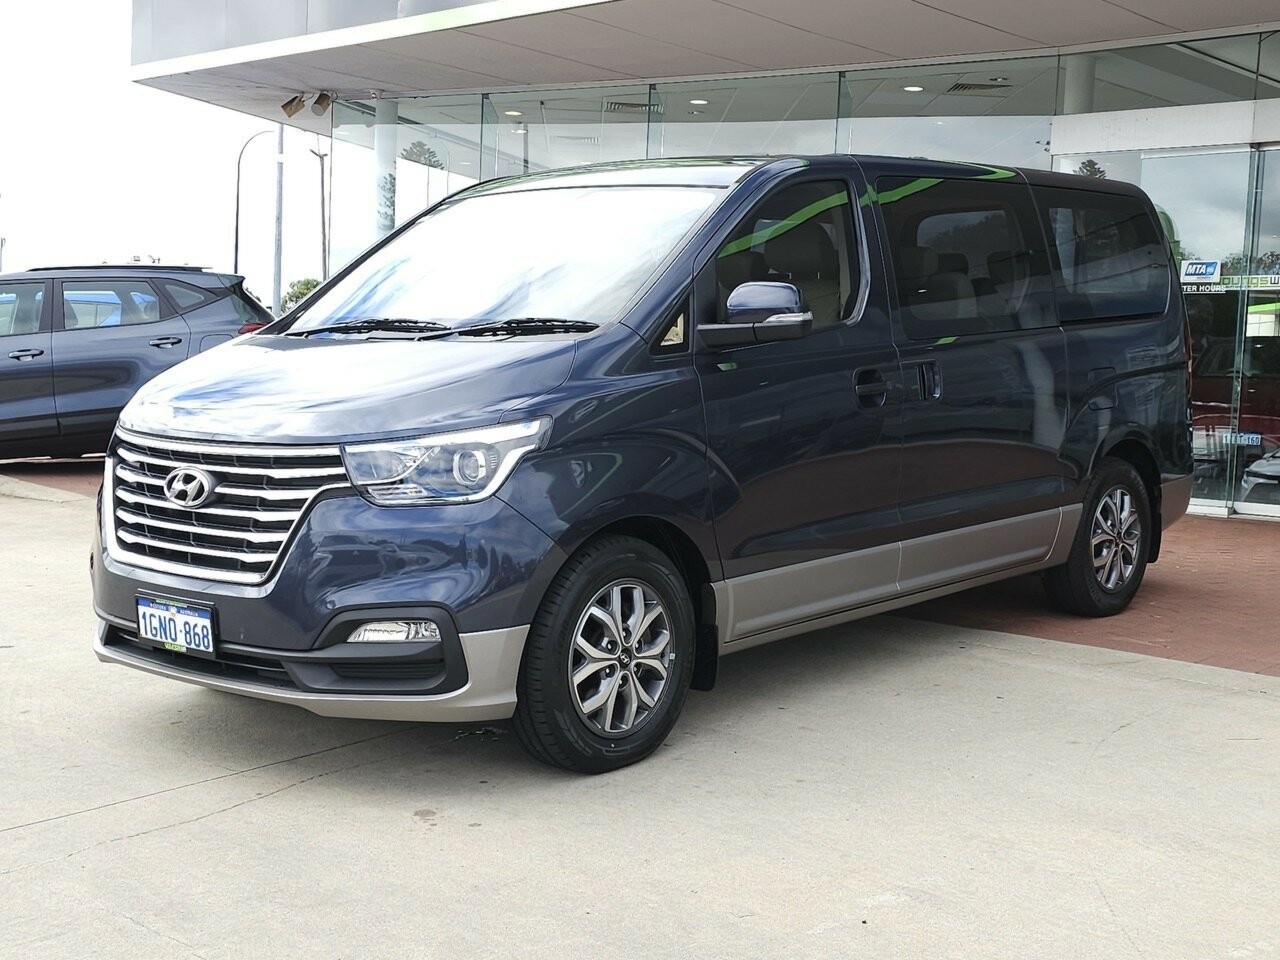 Hyundai Imax image 4